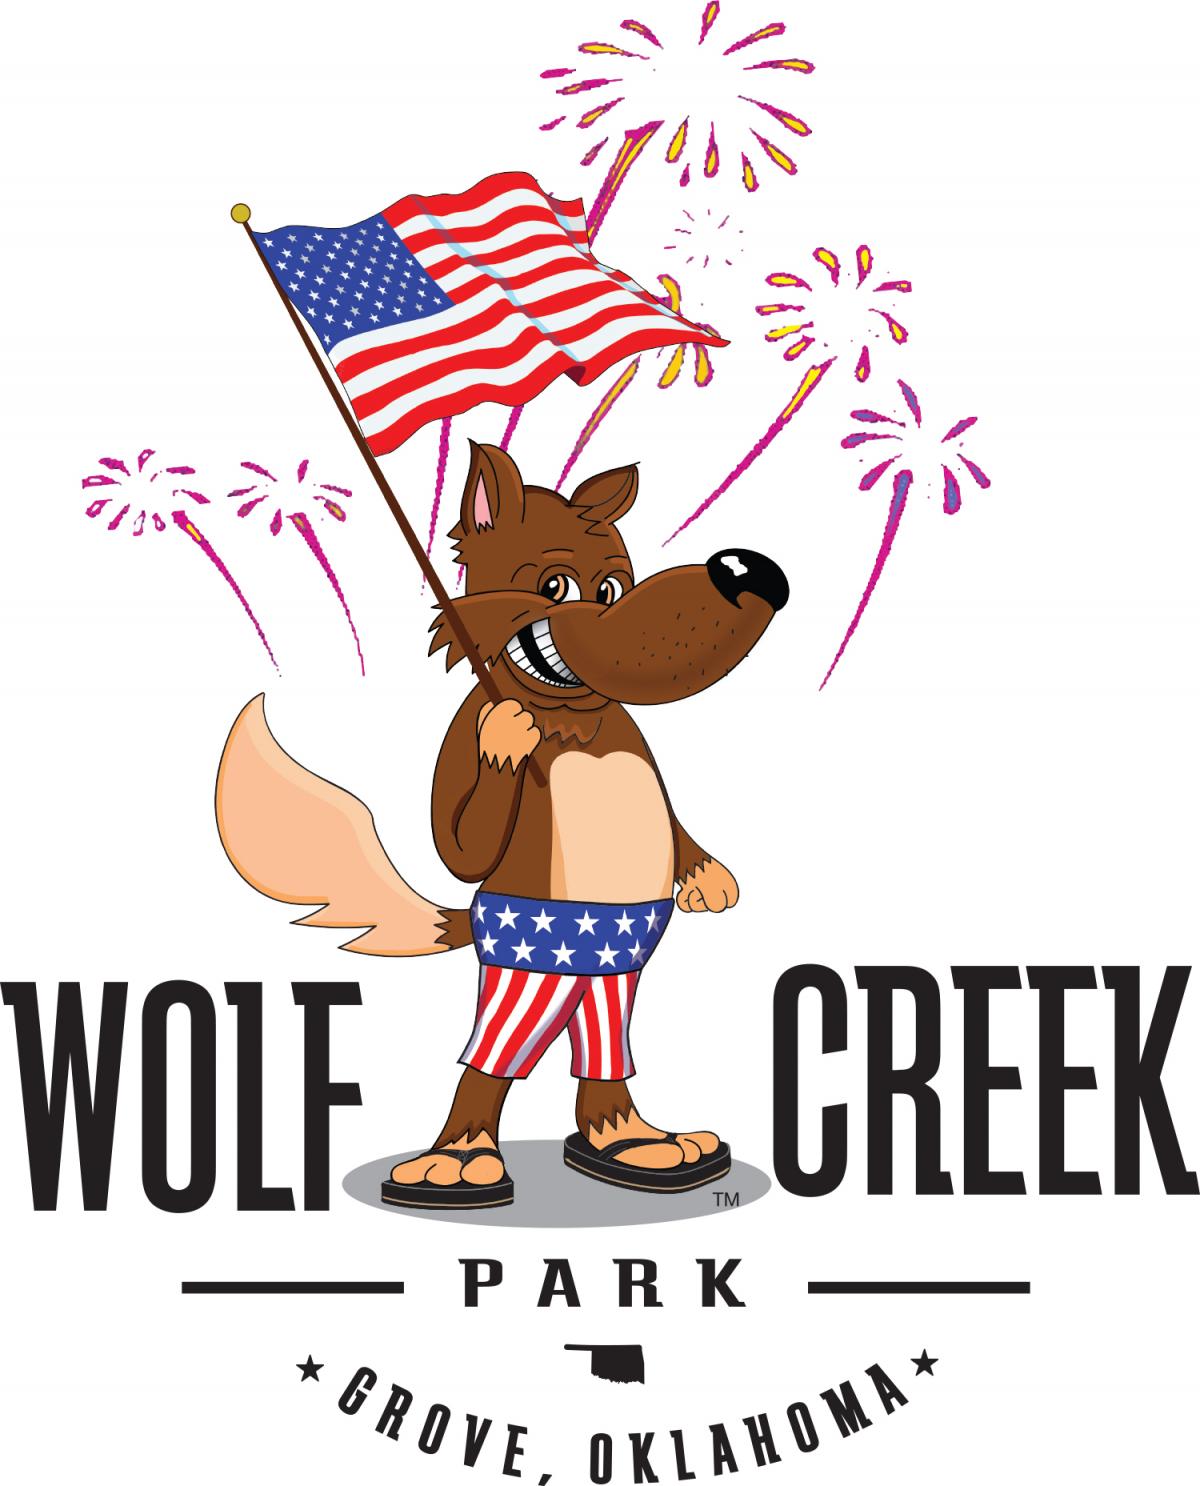 oklahoma, grove, grand lake, wolf creek park, july 3, july 4 celebration